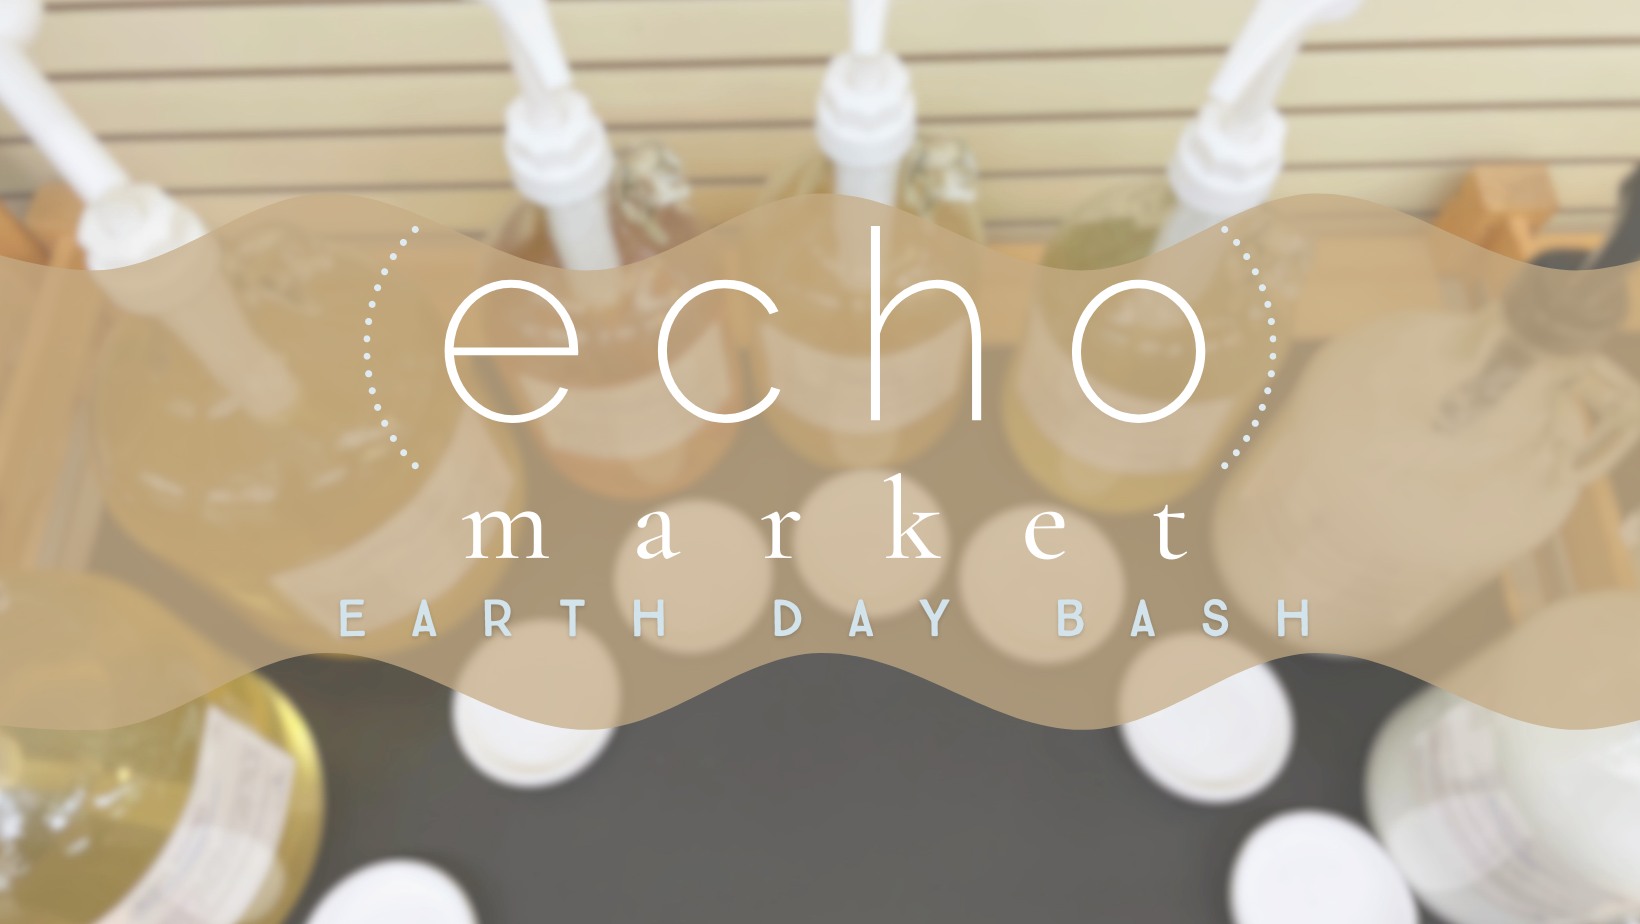 Echo Earth Day Bash: A Refill Revolution